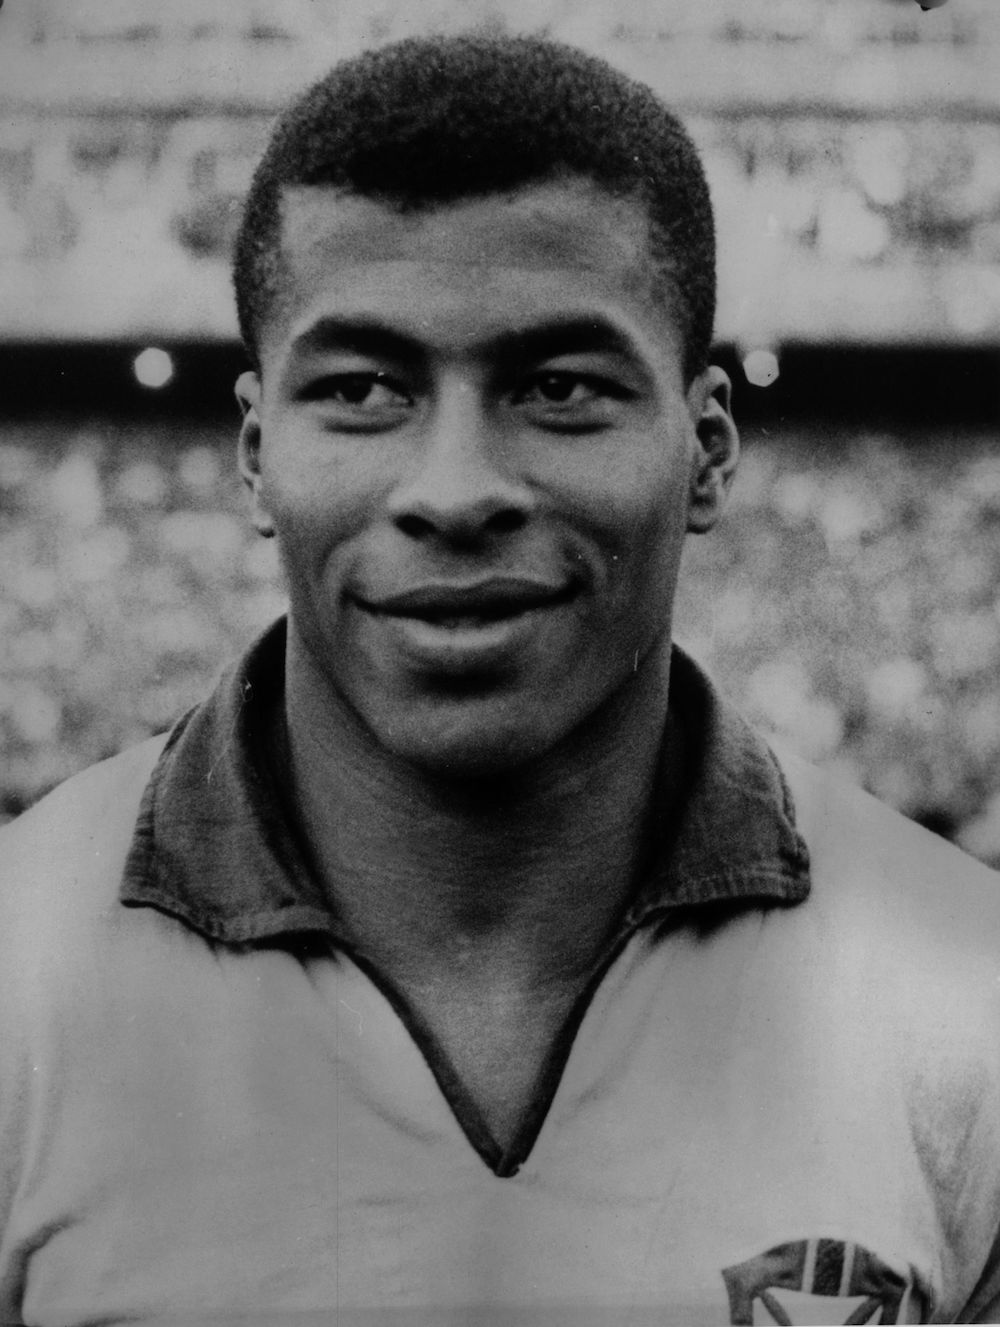 Brazilian footballer Jairzinho (Jair Ventura Filho), who scored in every round of the 1970 World Cup, which Brazil won